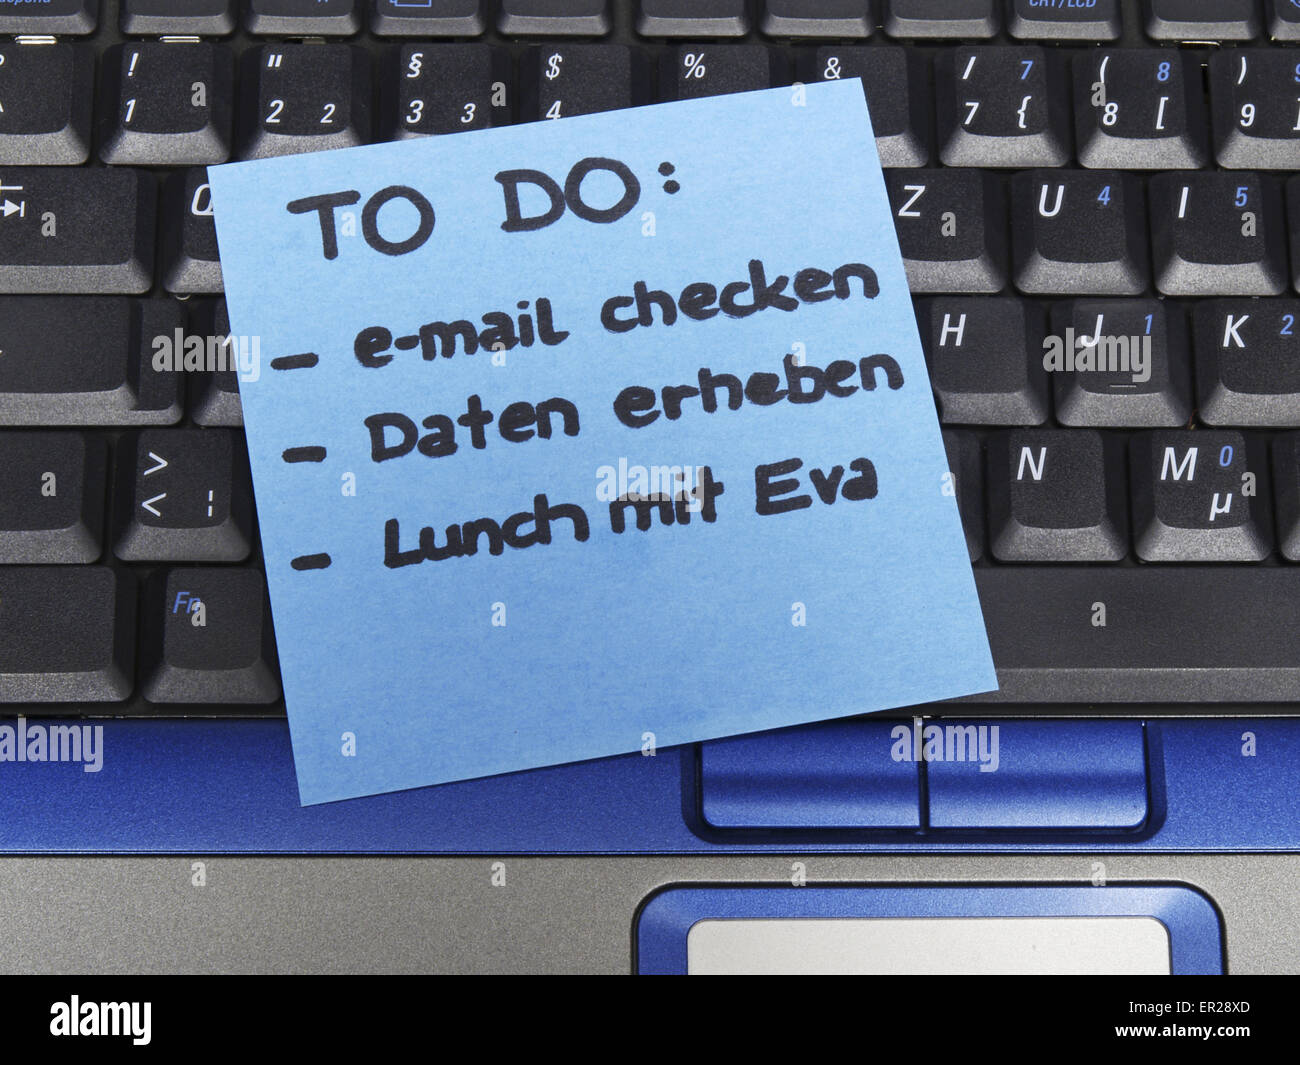 Memo note on notebook, to do e-mail checken, Daten erheben, Lunch mit Eva, to do check e-mail, collect data, lunch with Eva Stock Photo